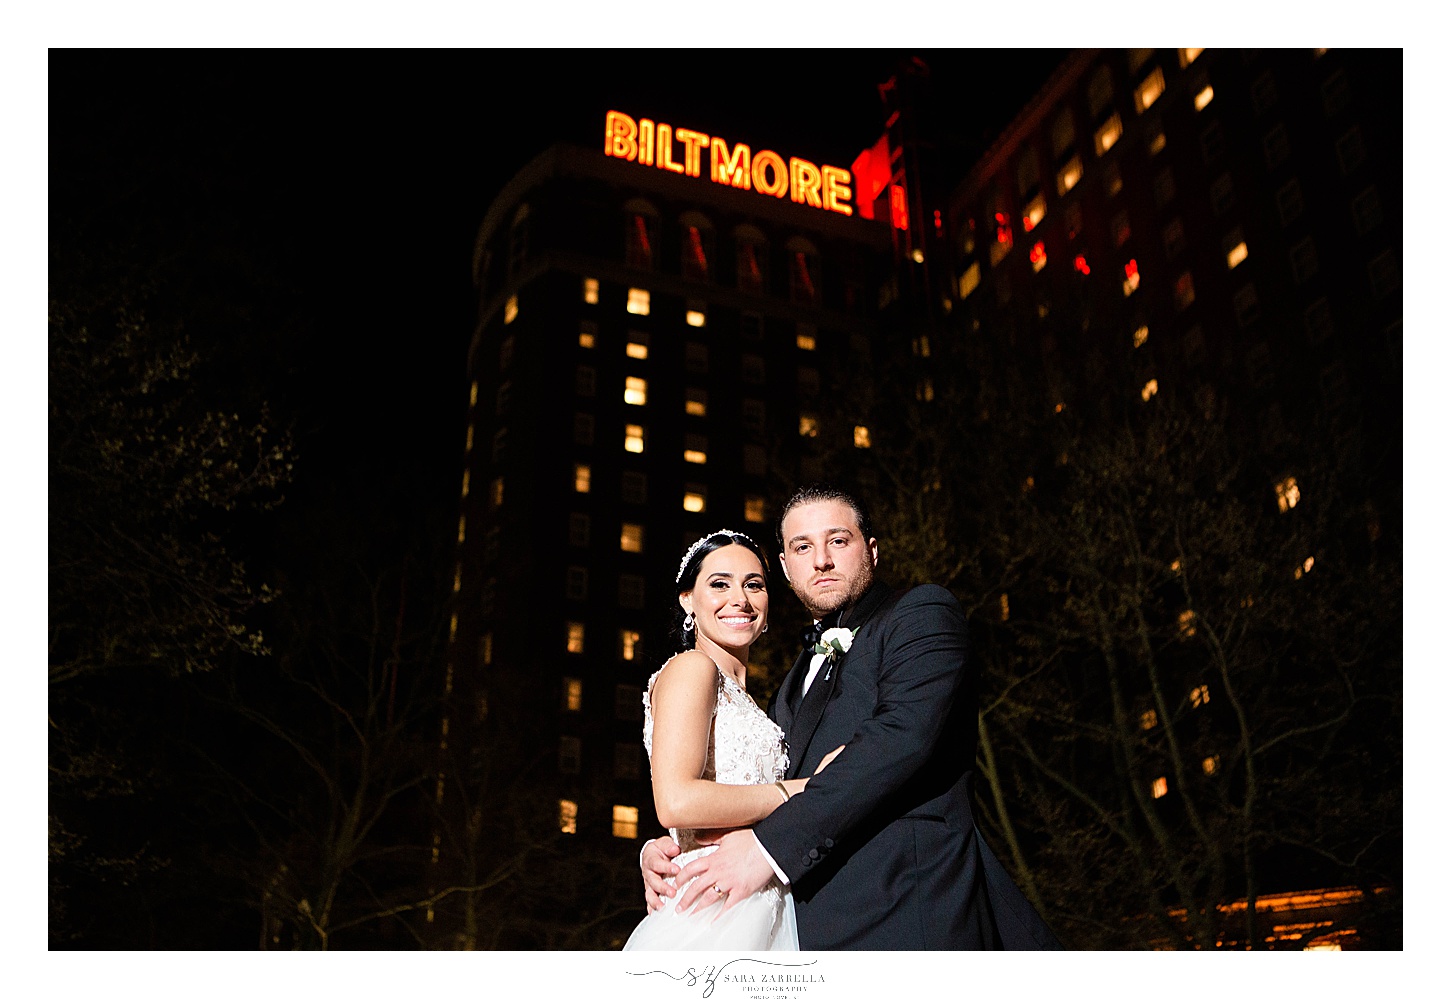 Providence Biltmore wedding photographed by Sara Zarrella Photography